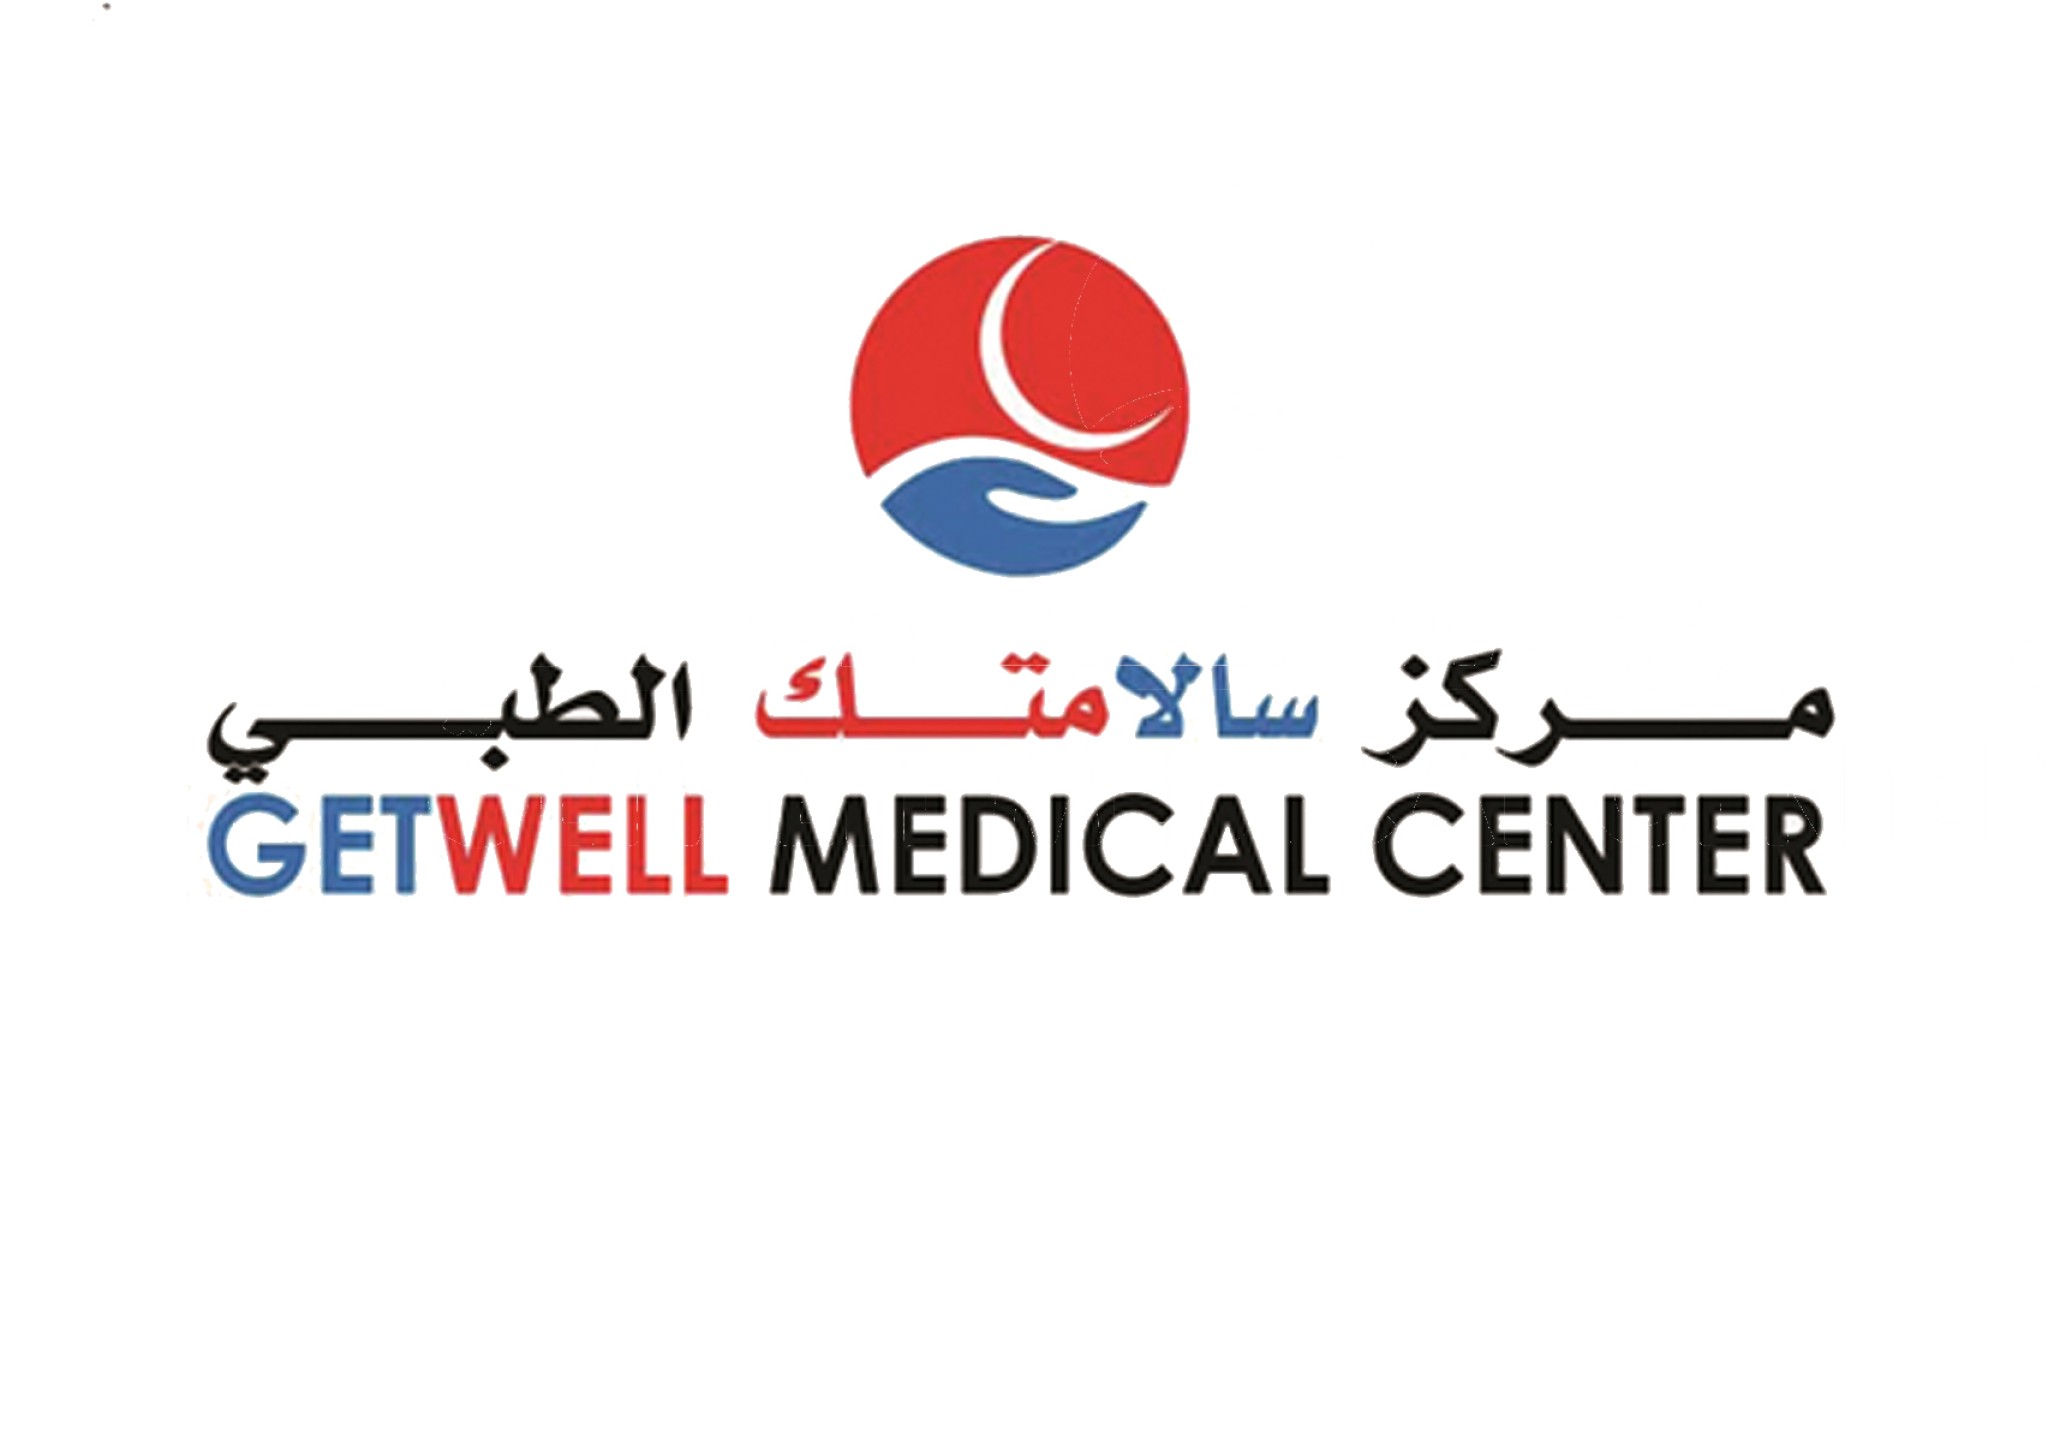 Getwell Medical Center